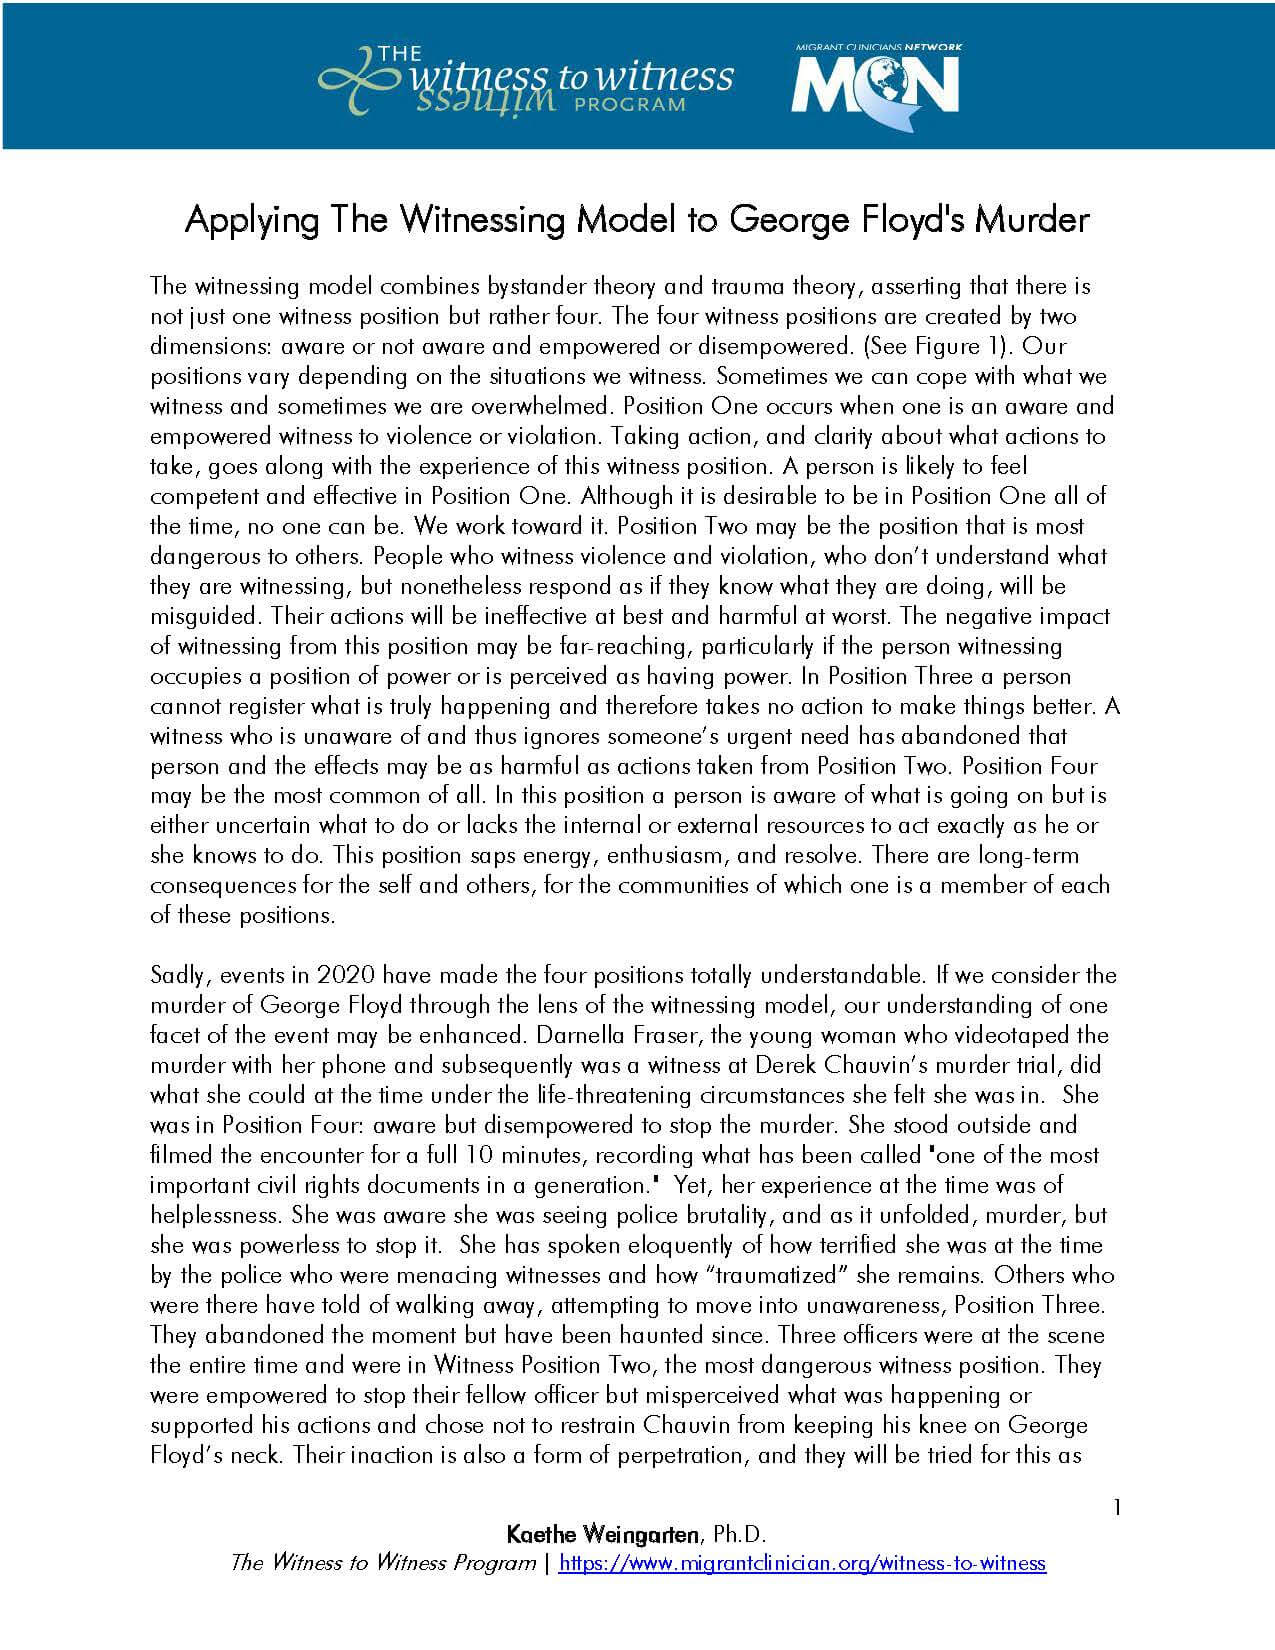 Applying the witnessing model to George Floyd's Murder